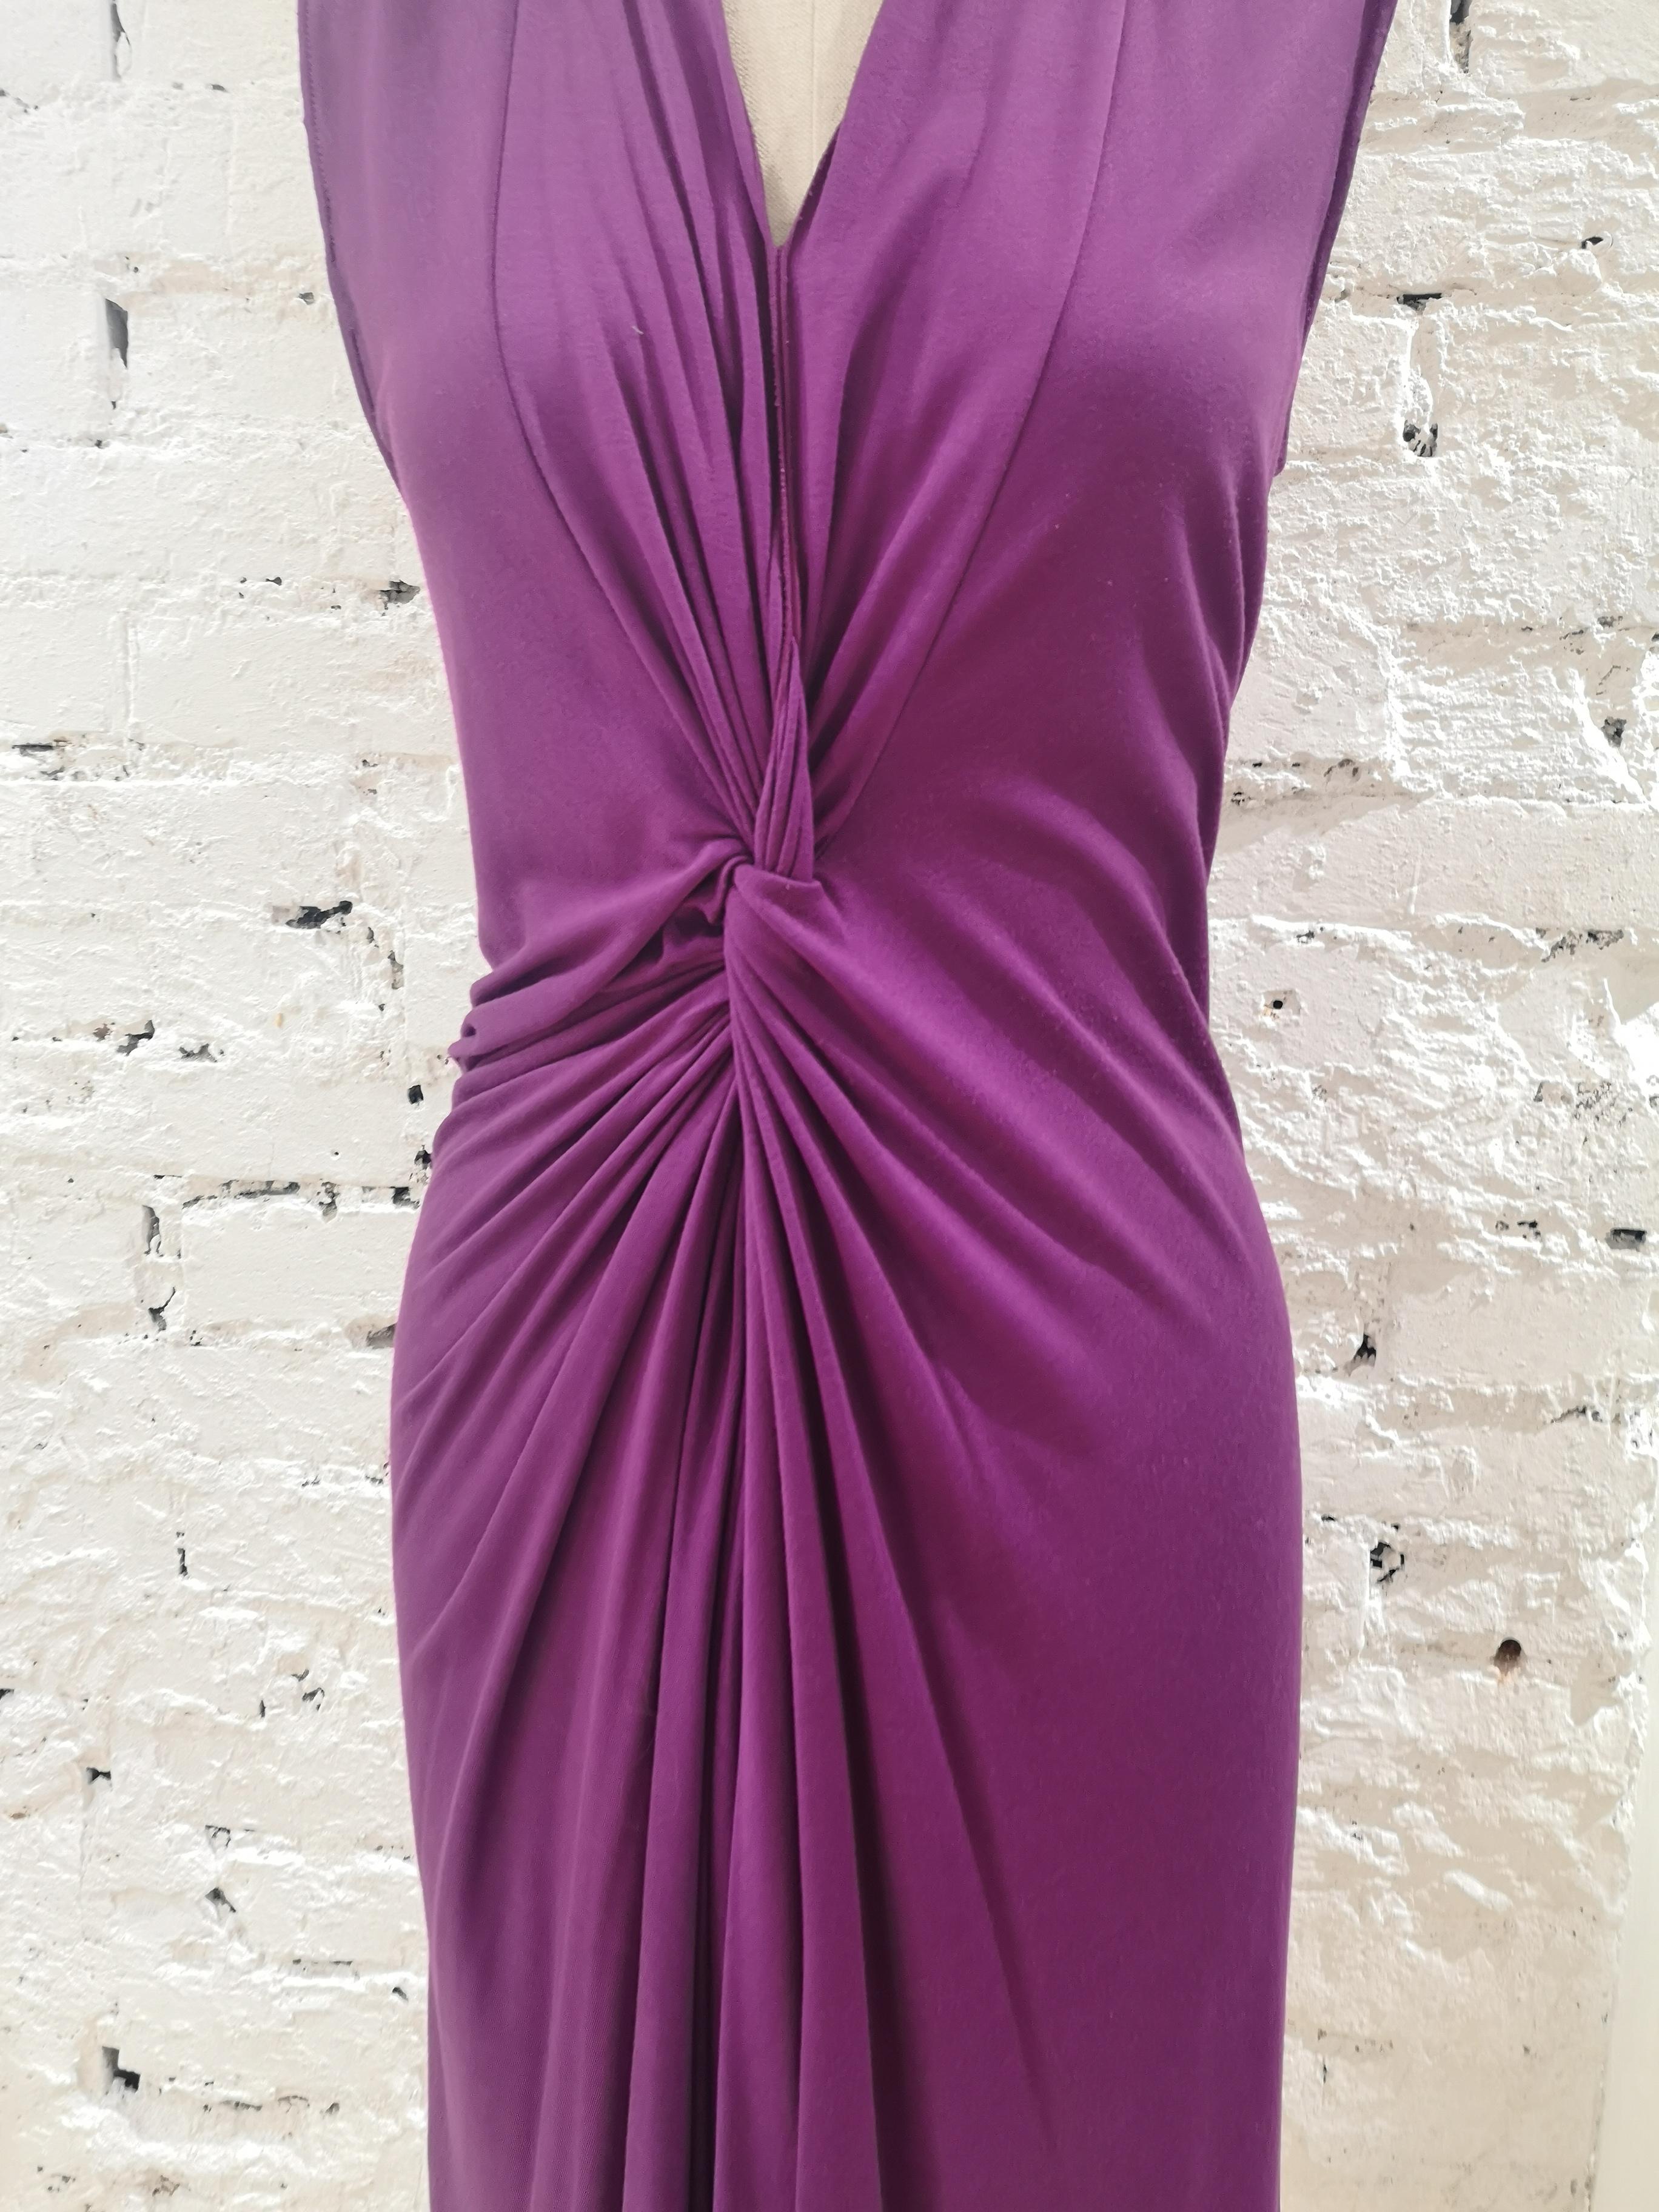 ysl purple dress